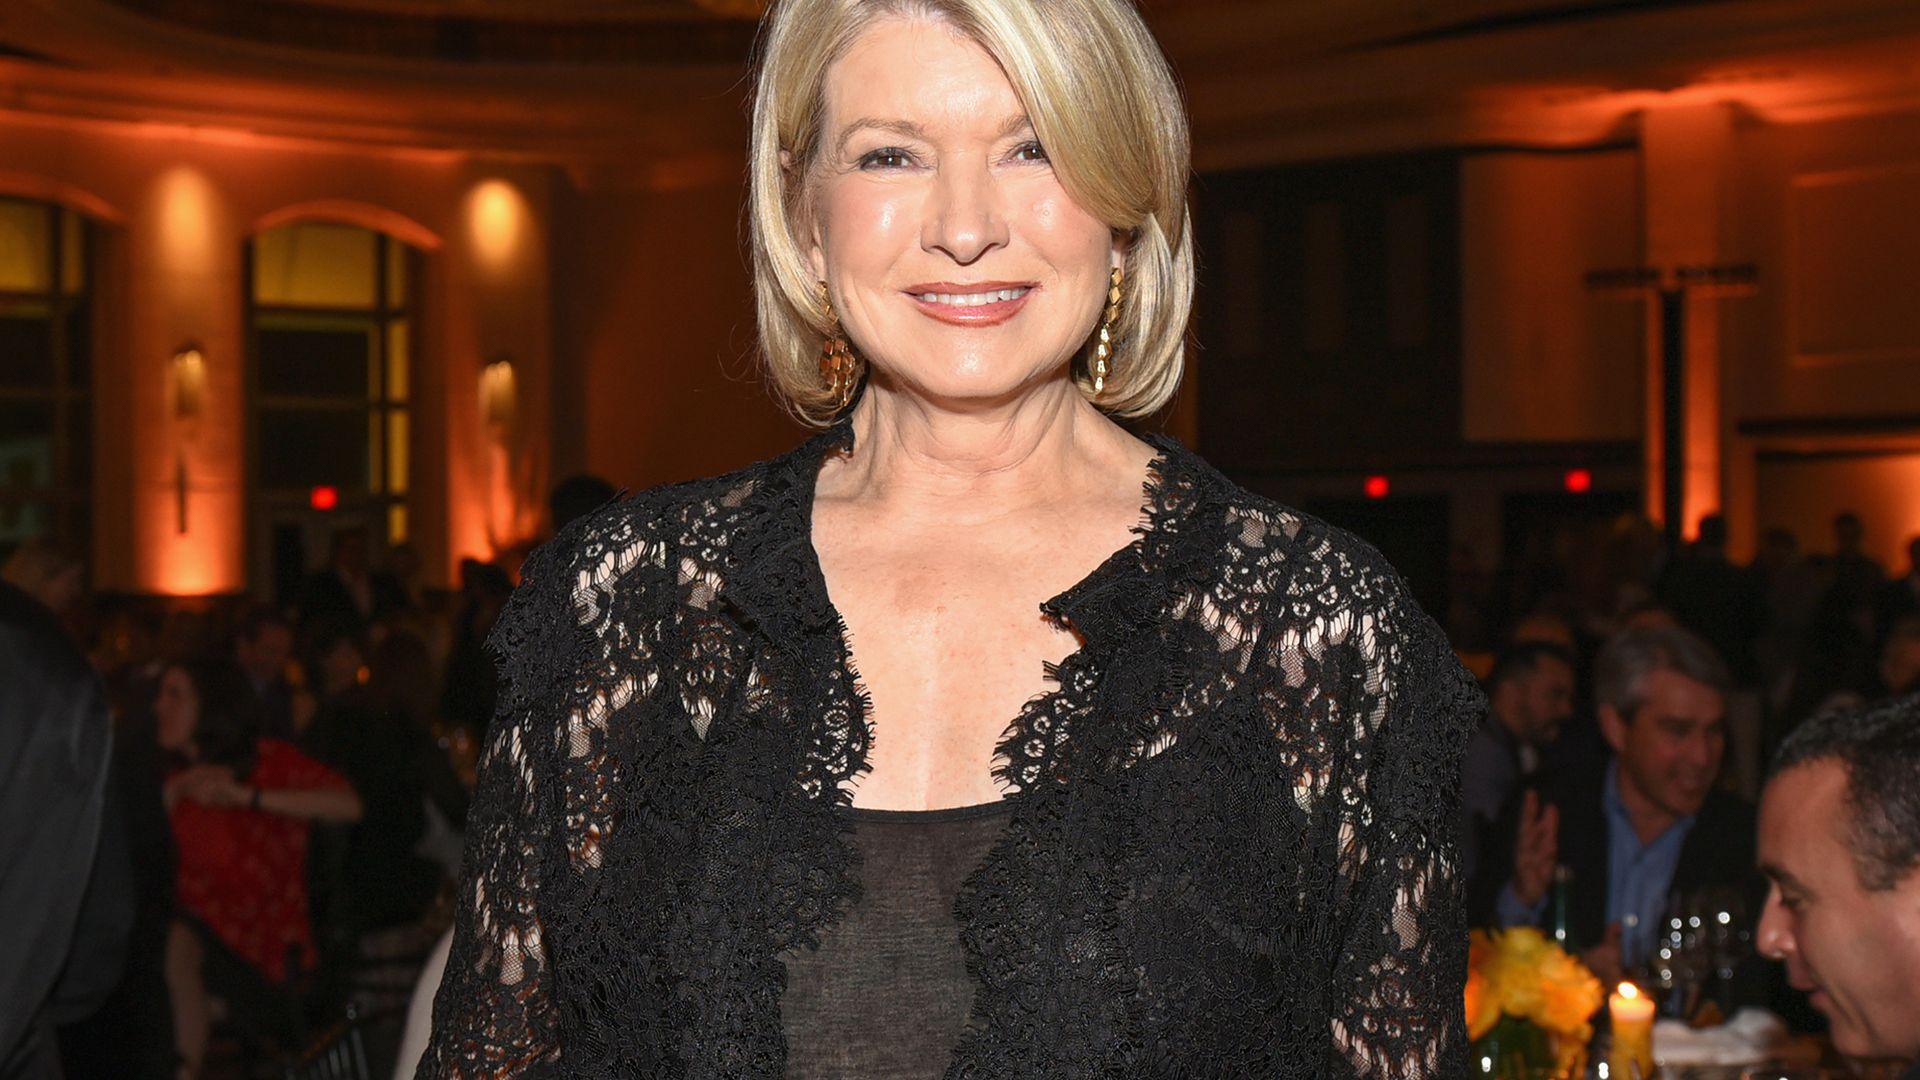 Martha Stewart with glowing skin wearing black lace